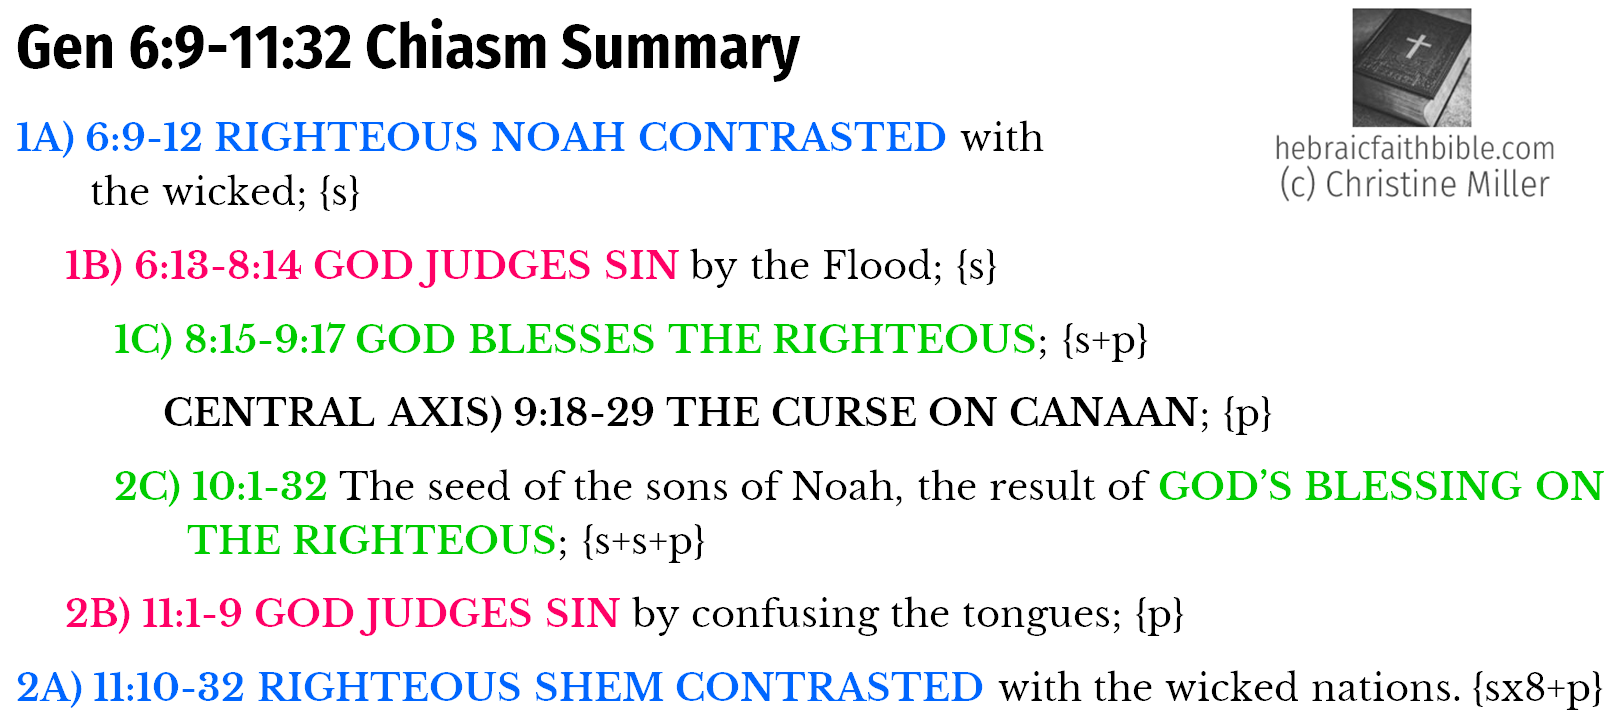 Gen 6:9-11:32 Noach "Noah" Chiasm Summary | hebraicfaithbible.com